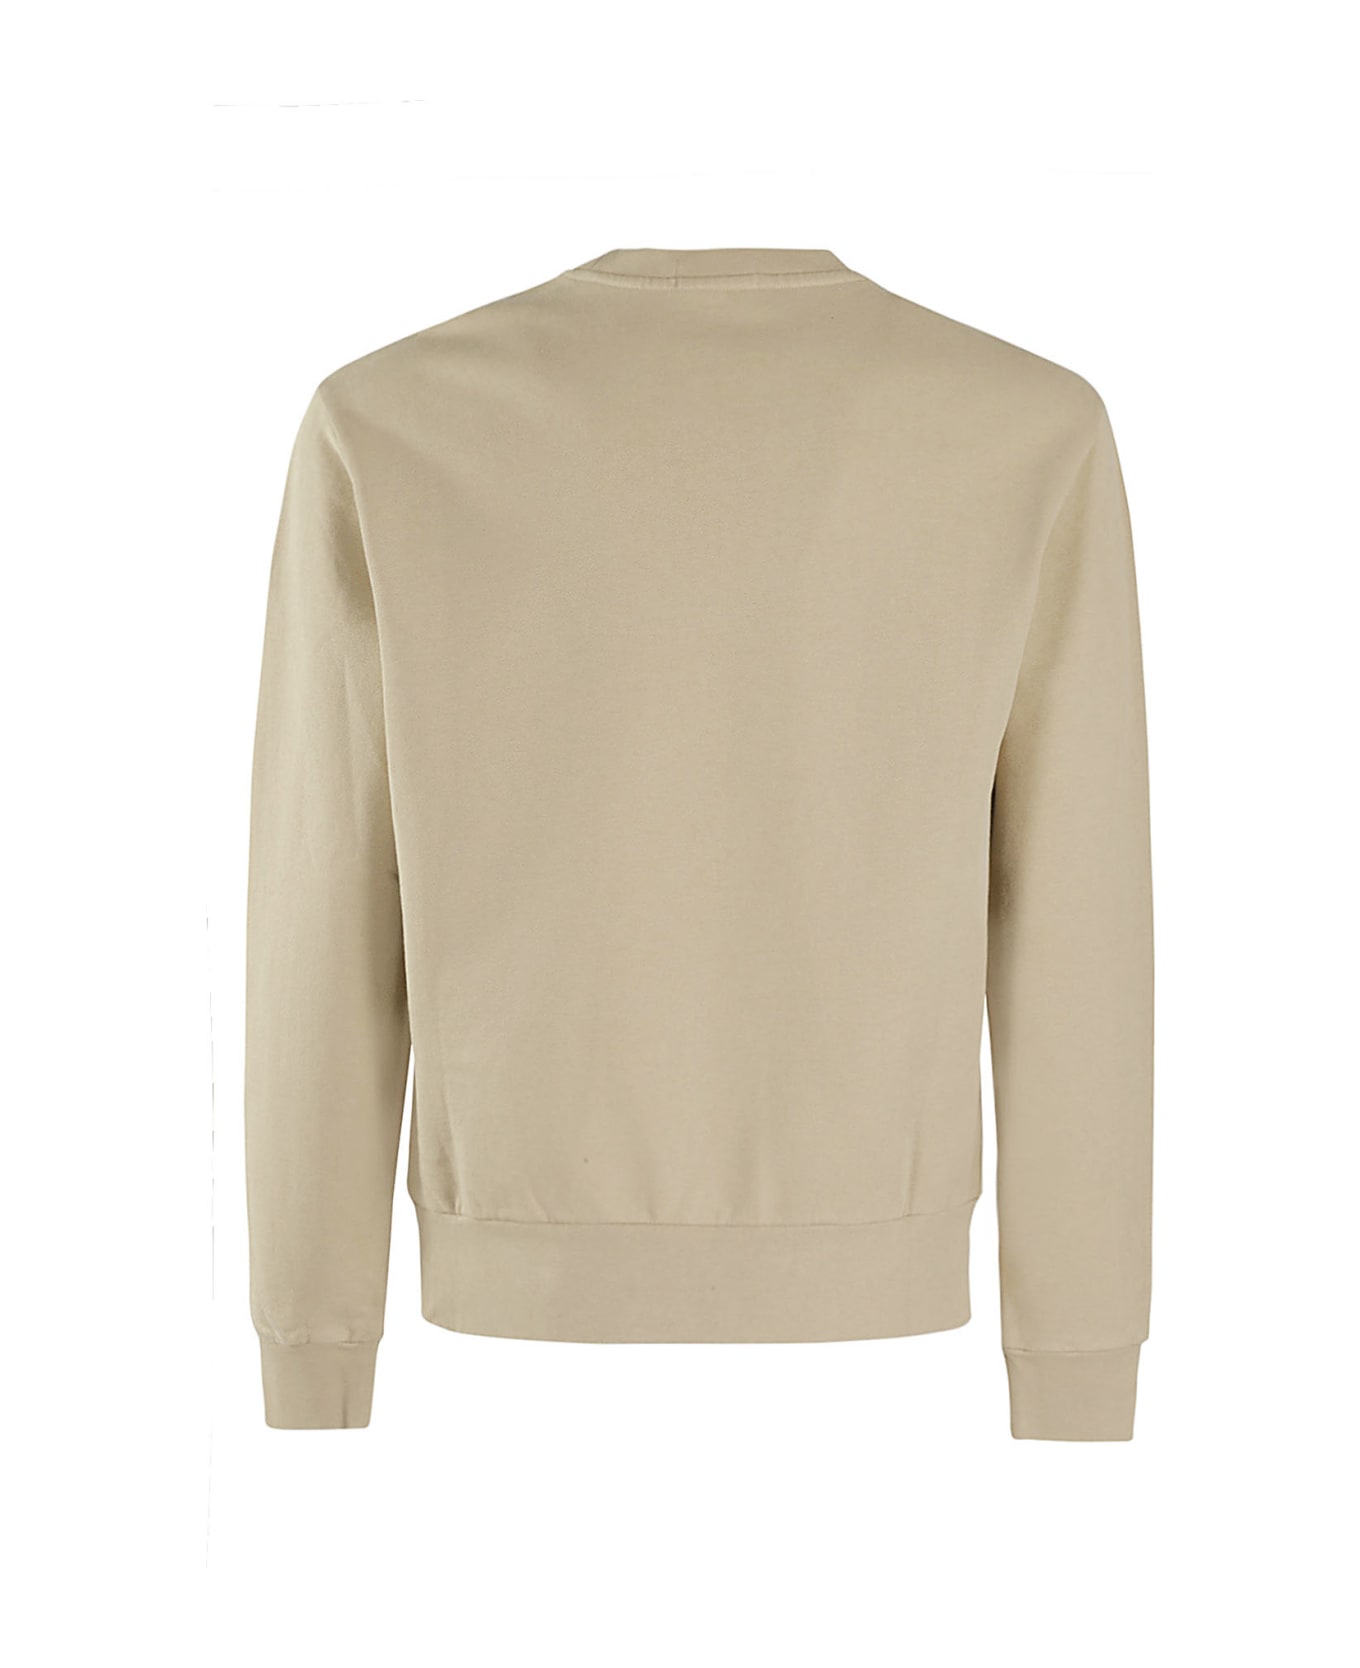 Polo Ralph Lauren Long Sleeve Sweatshirt - Coastal Beige